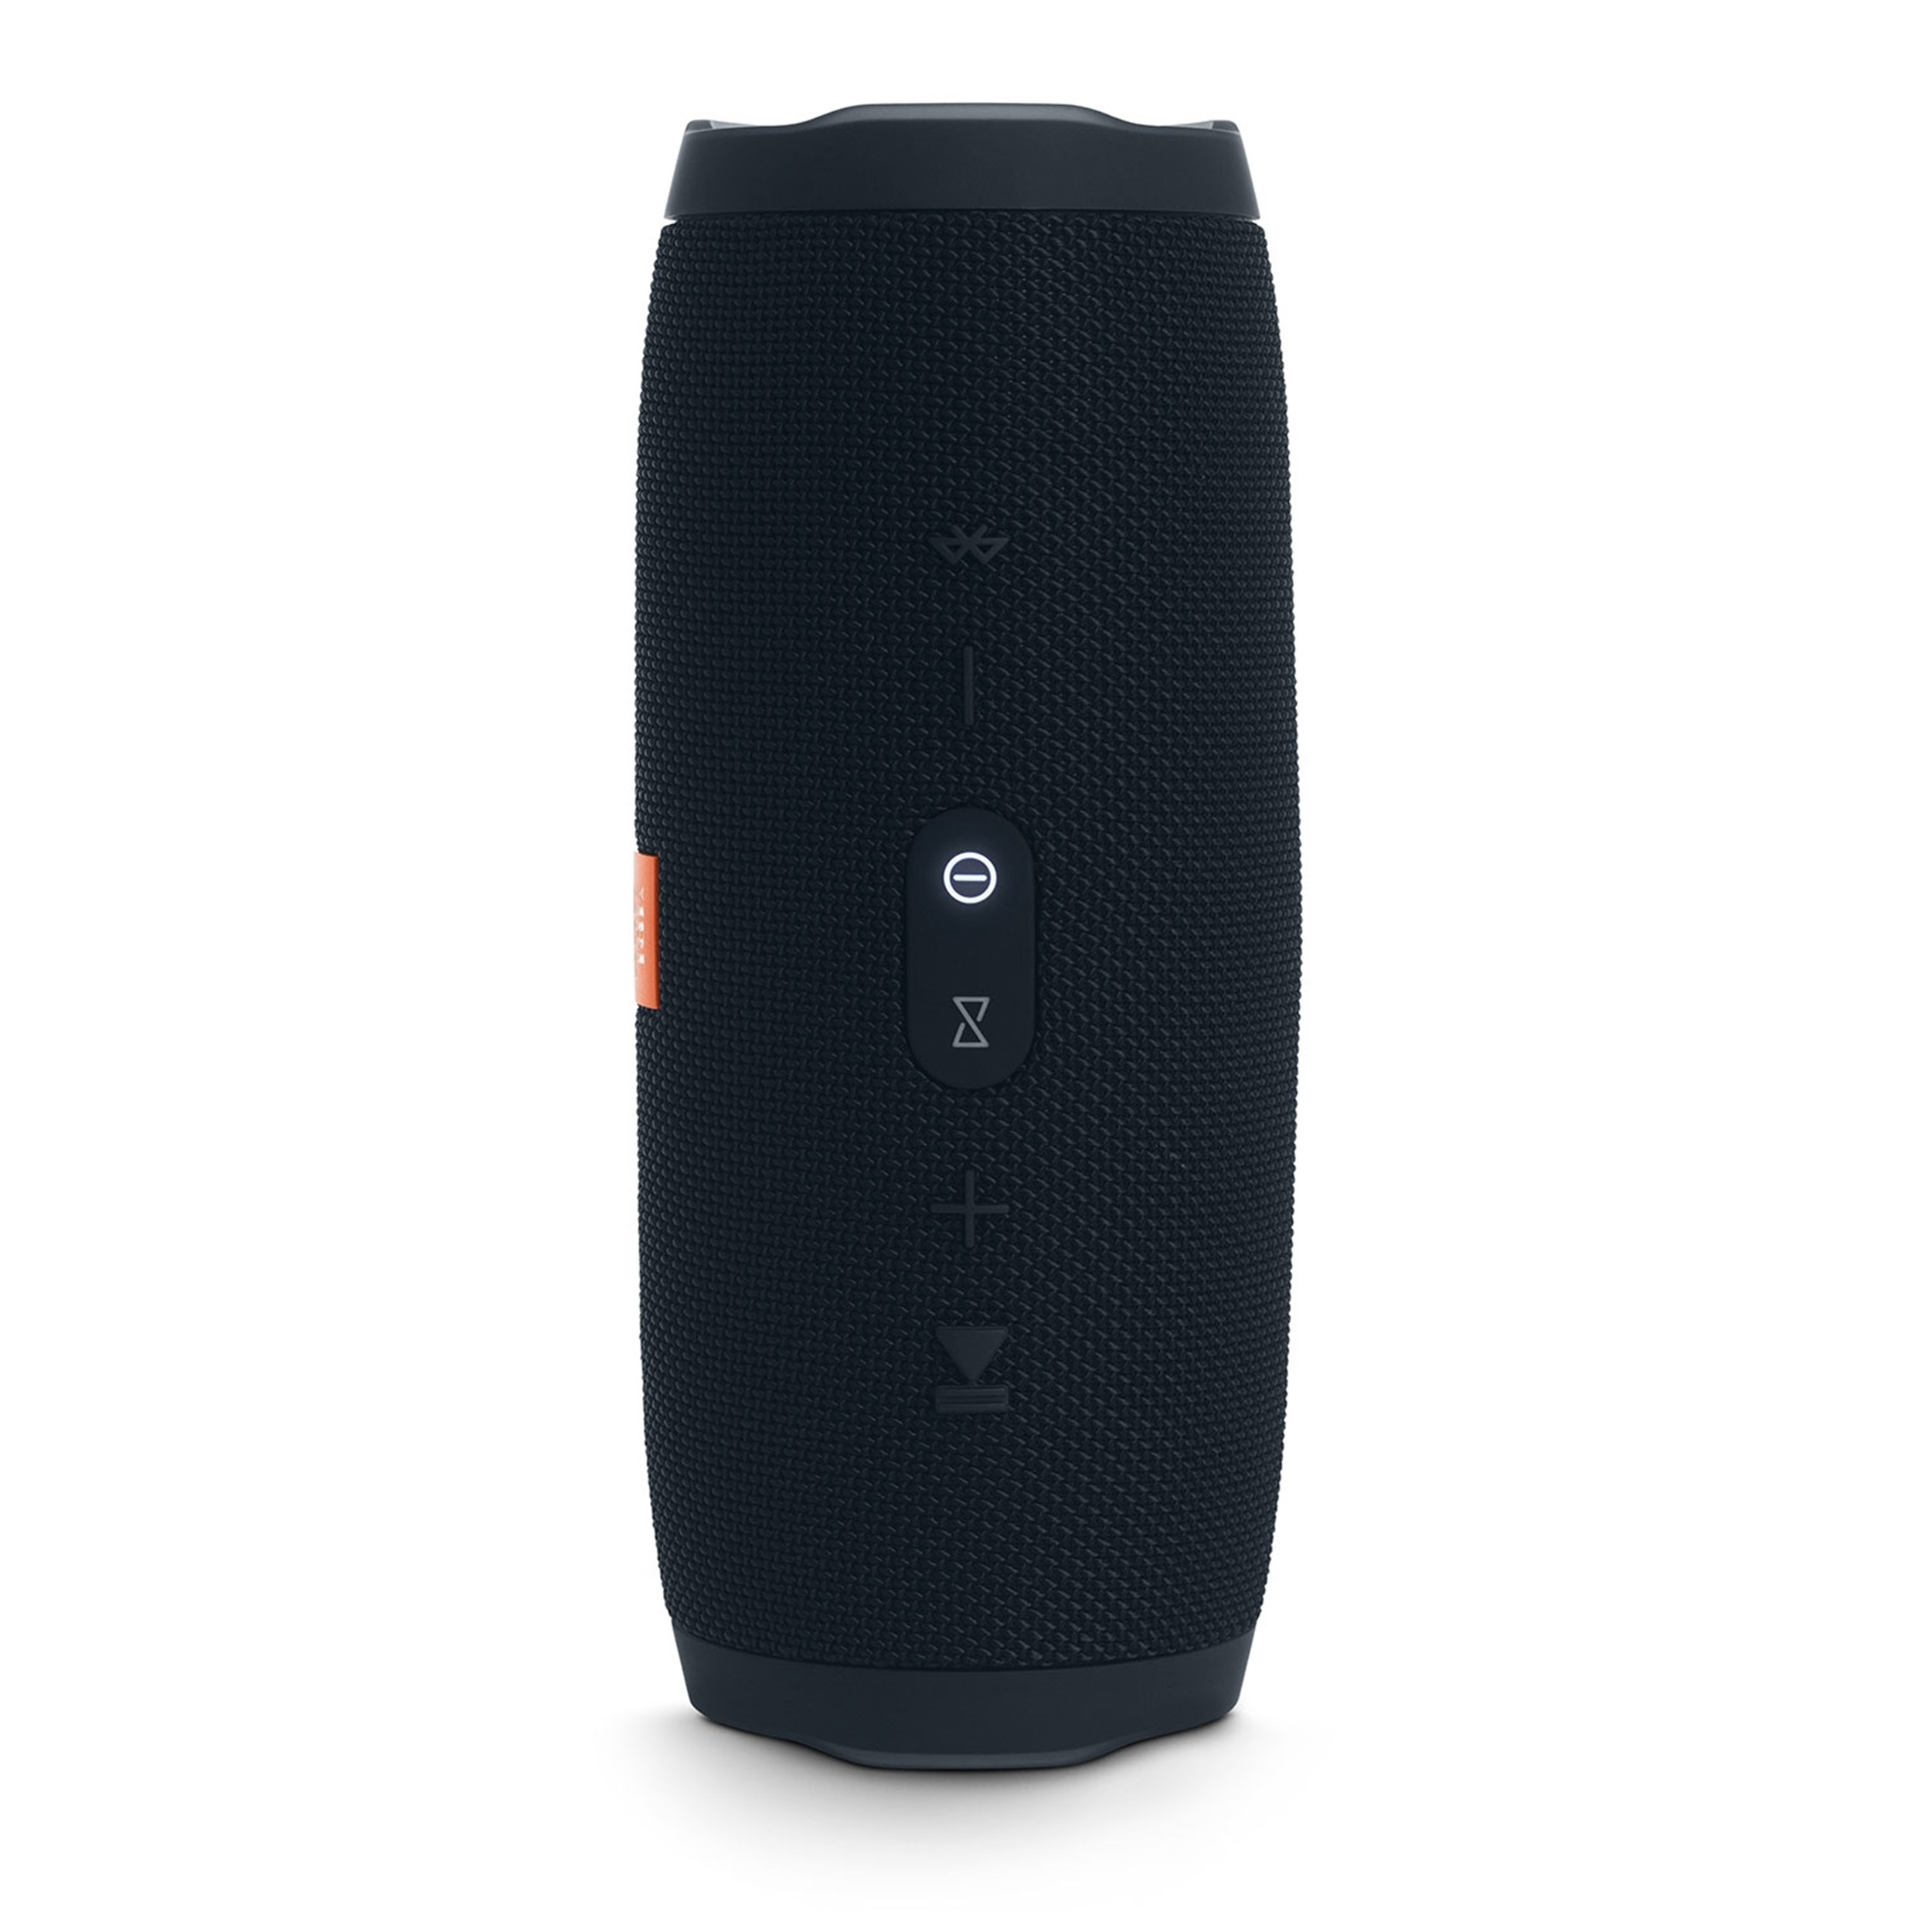 Lappe fiktiv Grundig Køb JBL Charge 3 Bluetooth højtaler | 3 års medlemsgaranti